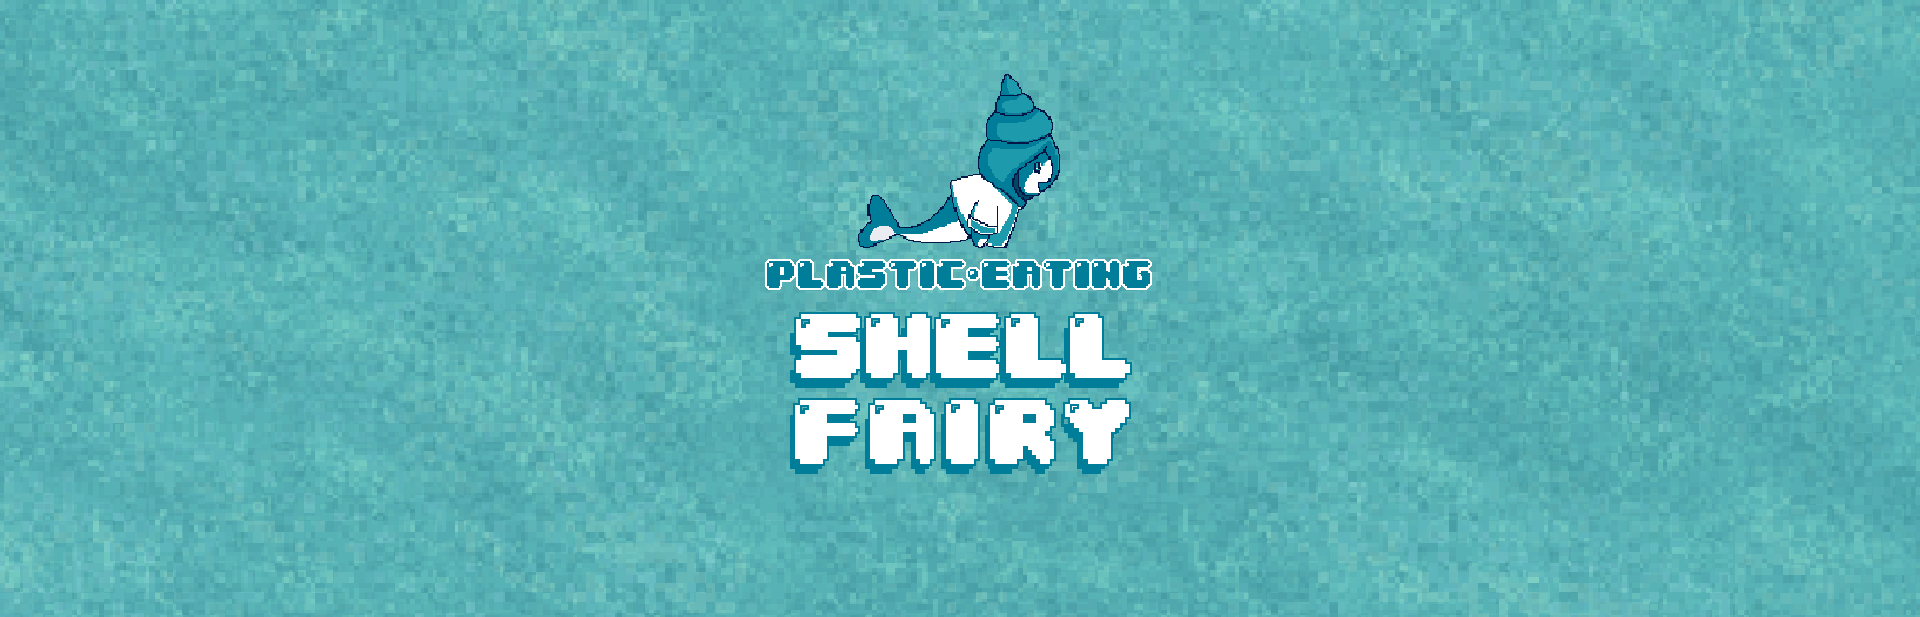 Plastic-eating Shell Fairy